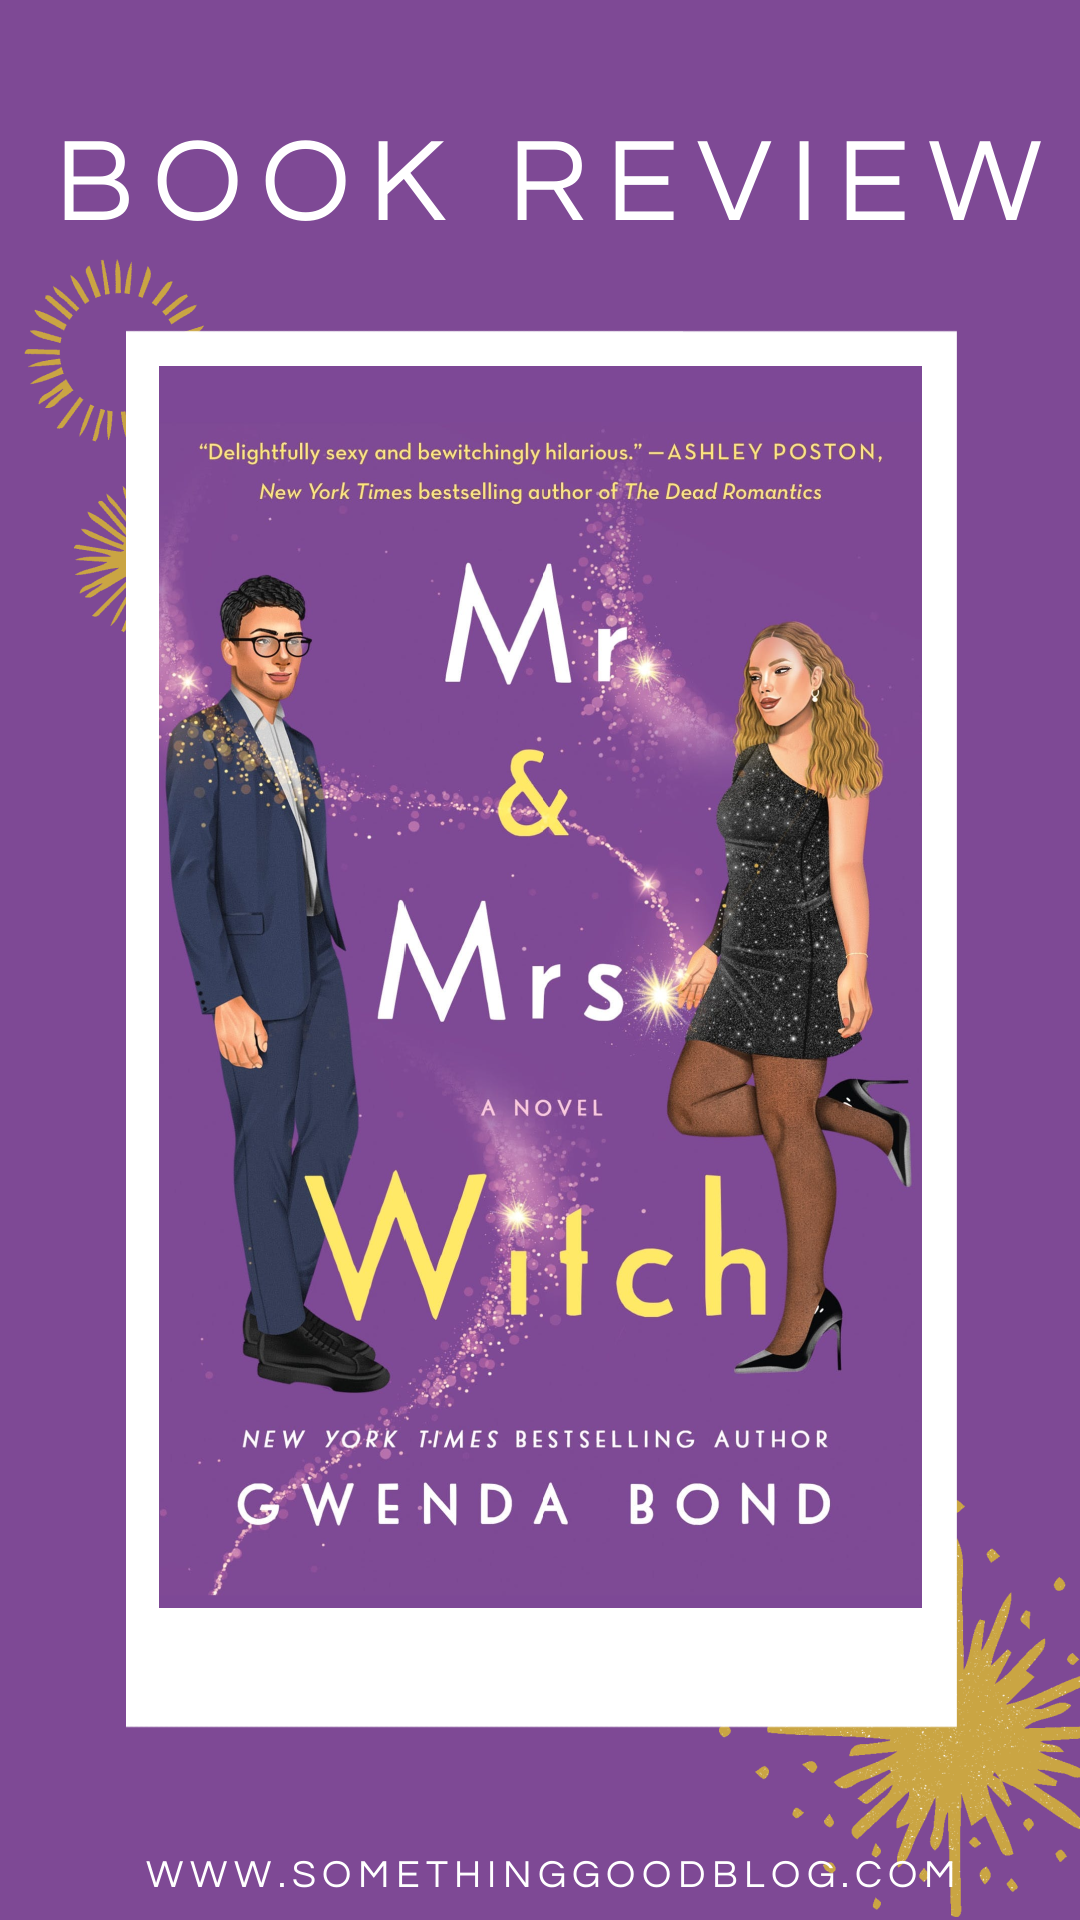 Mr. & Mrs. Witch by Gwenda Bond